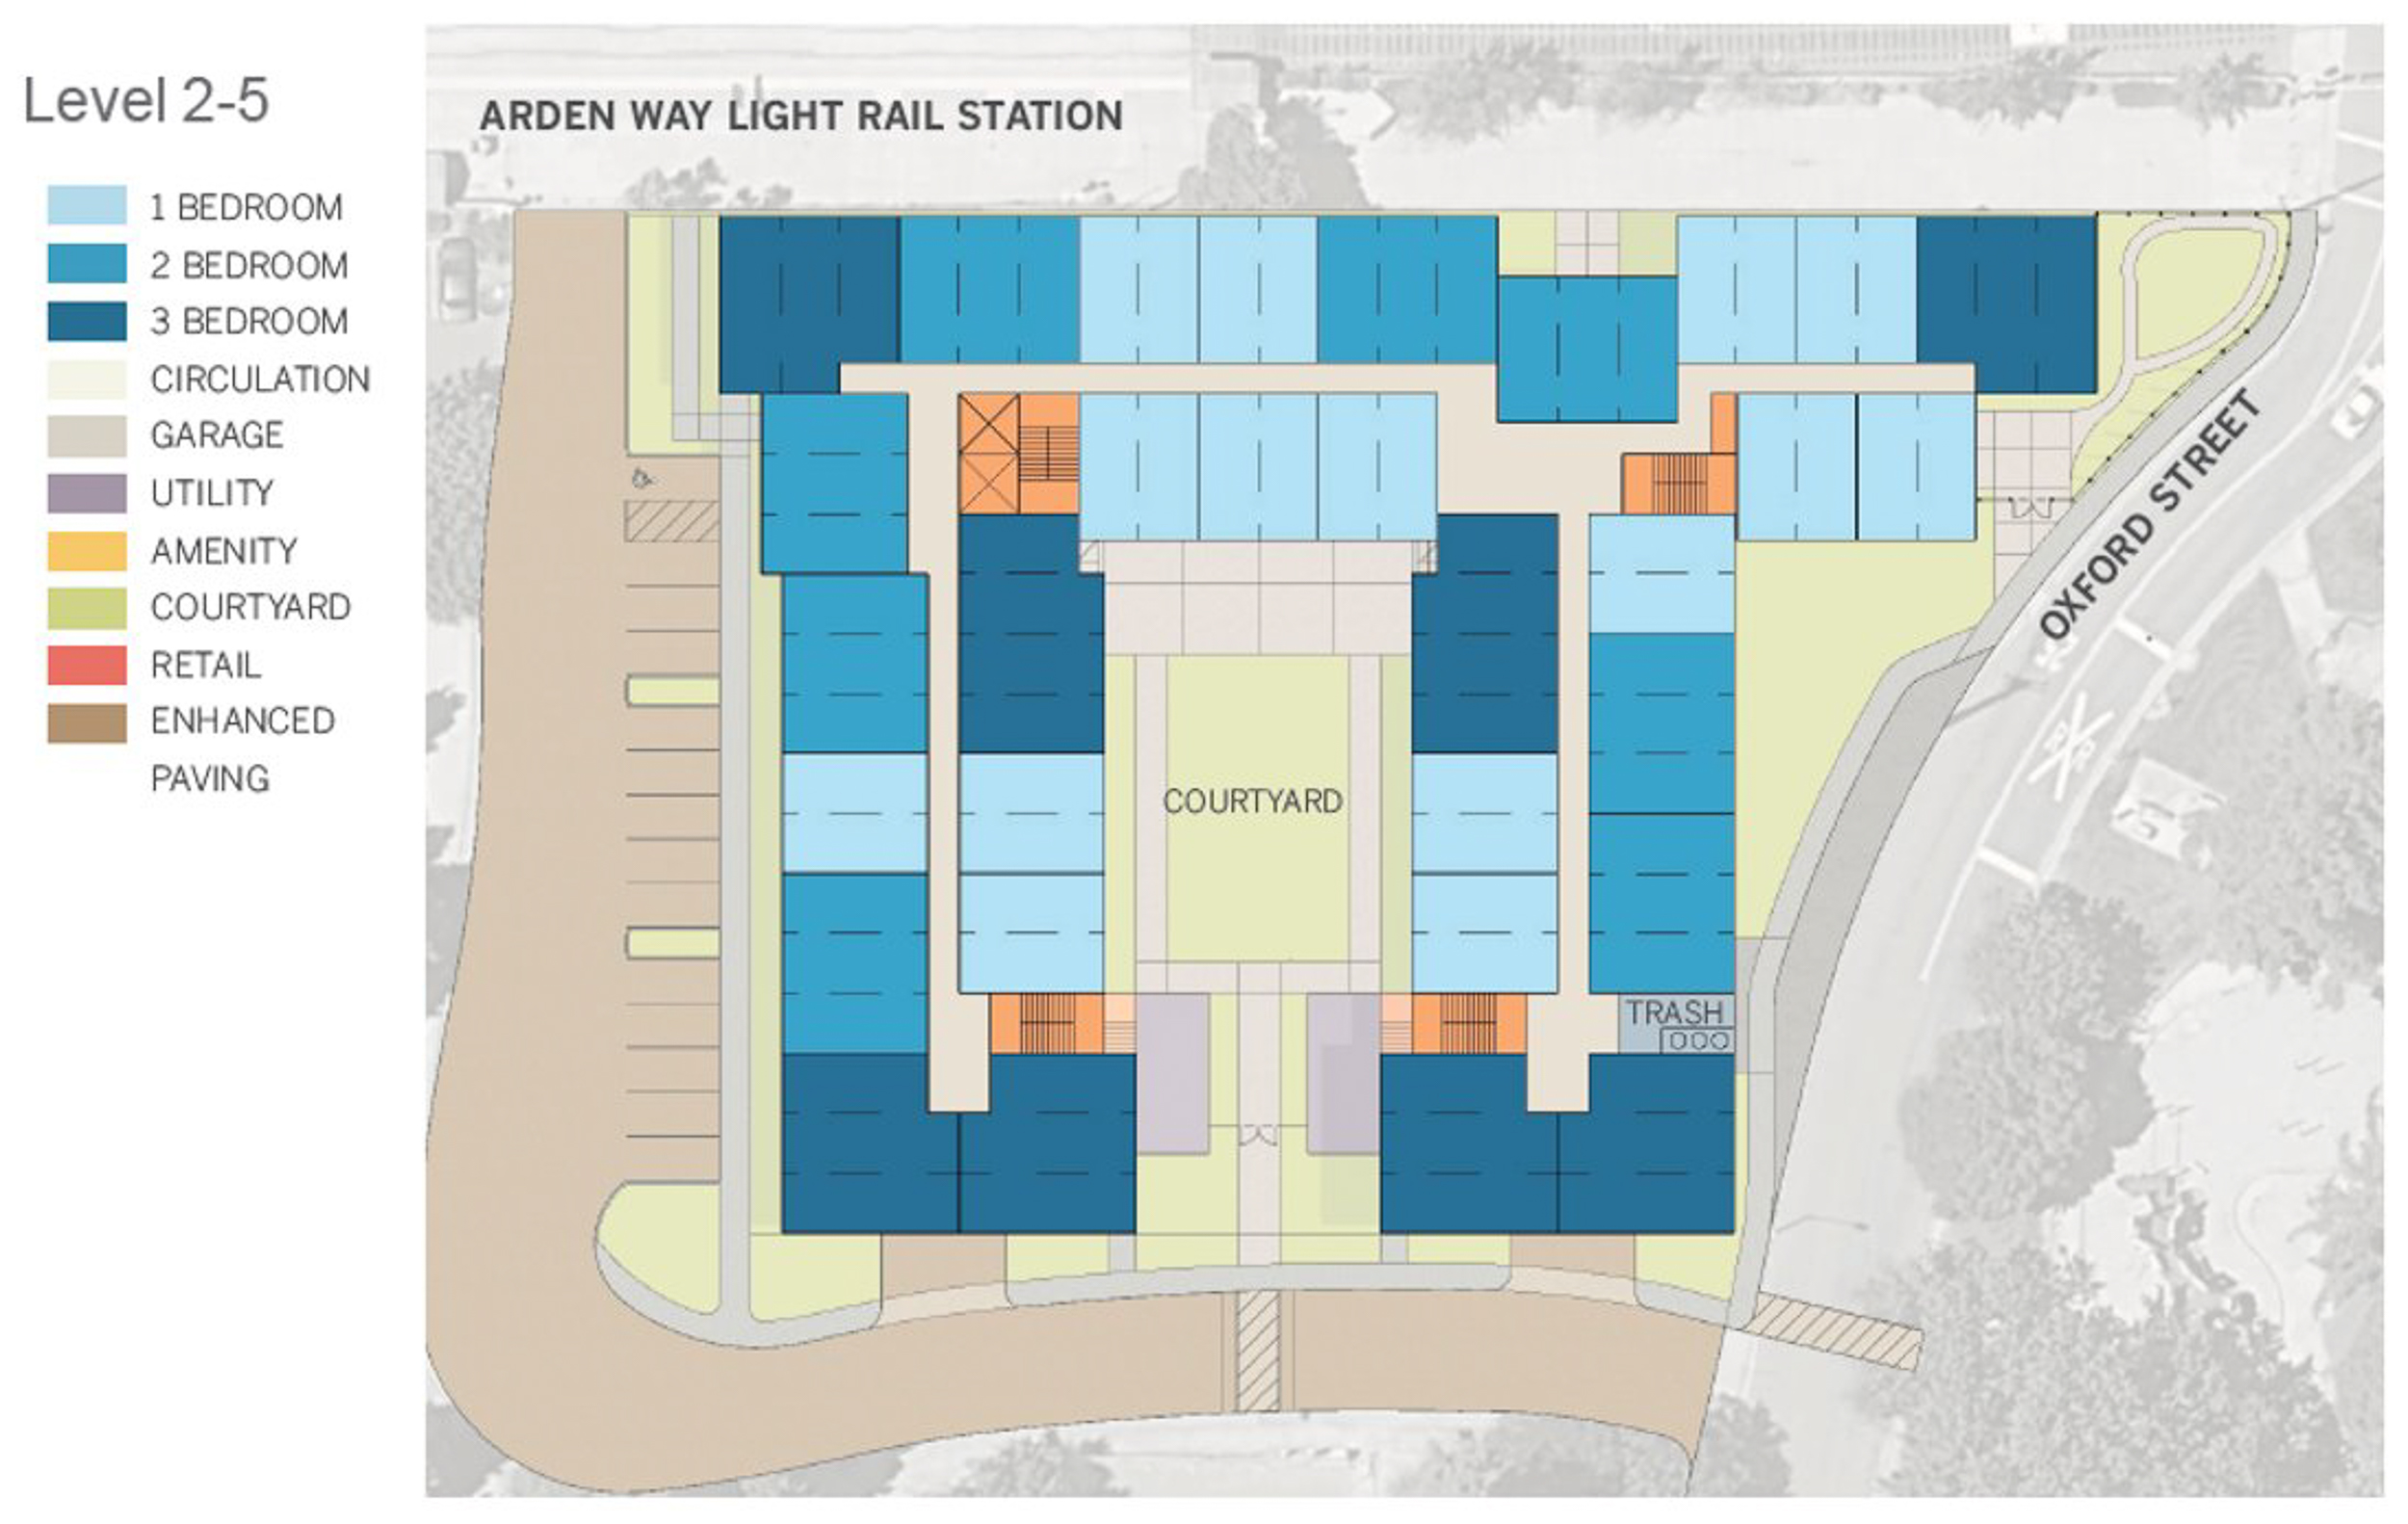 440 Arden Way floor plan for levels 2-5, image courtesy coUrbanize